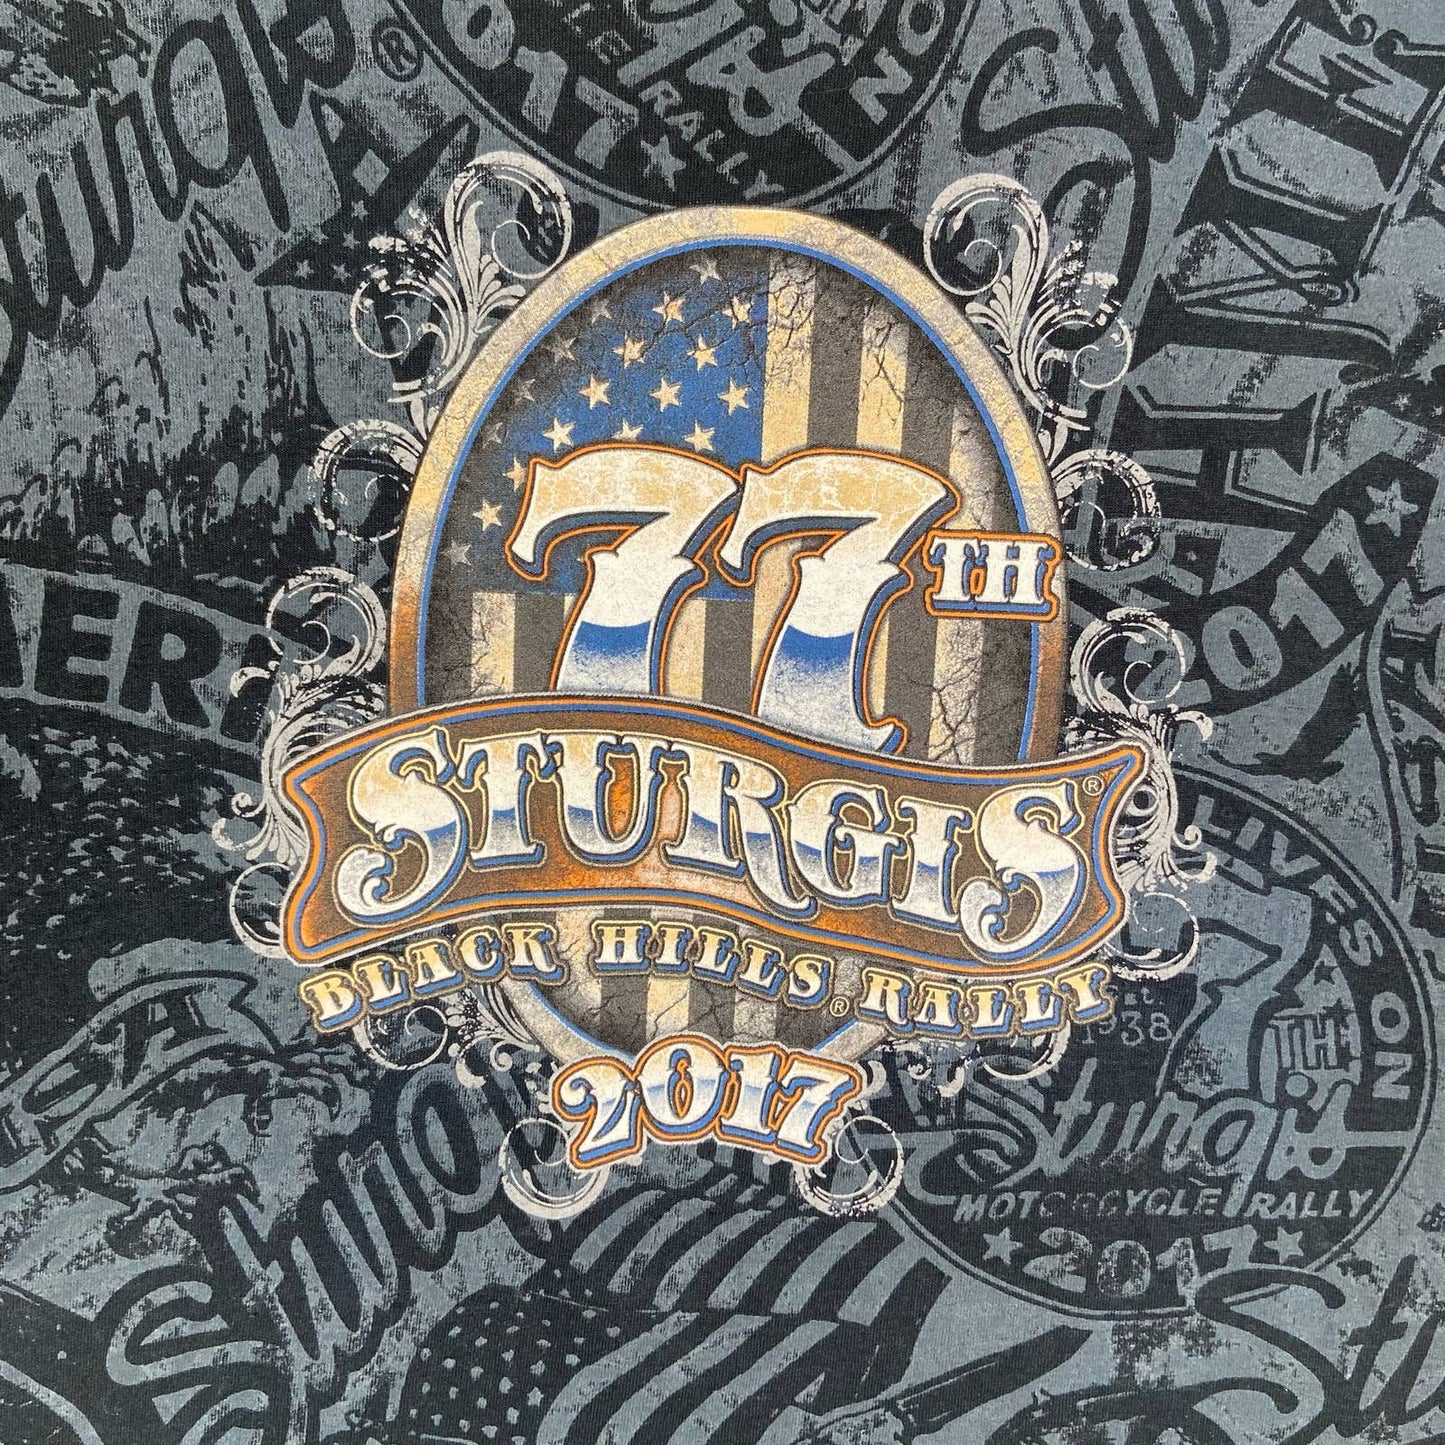 (L) Sturgis Black Hills Rally Motorcycles 2017 AOP T-Shirt